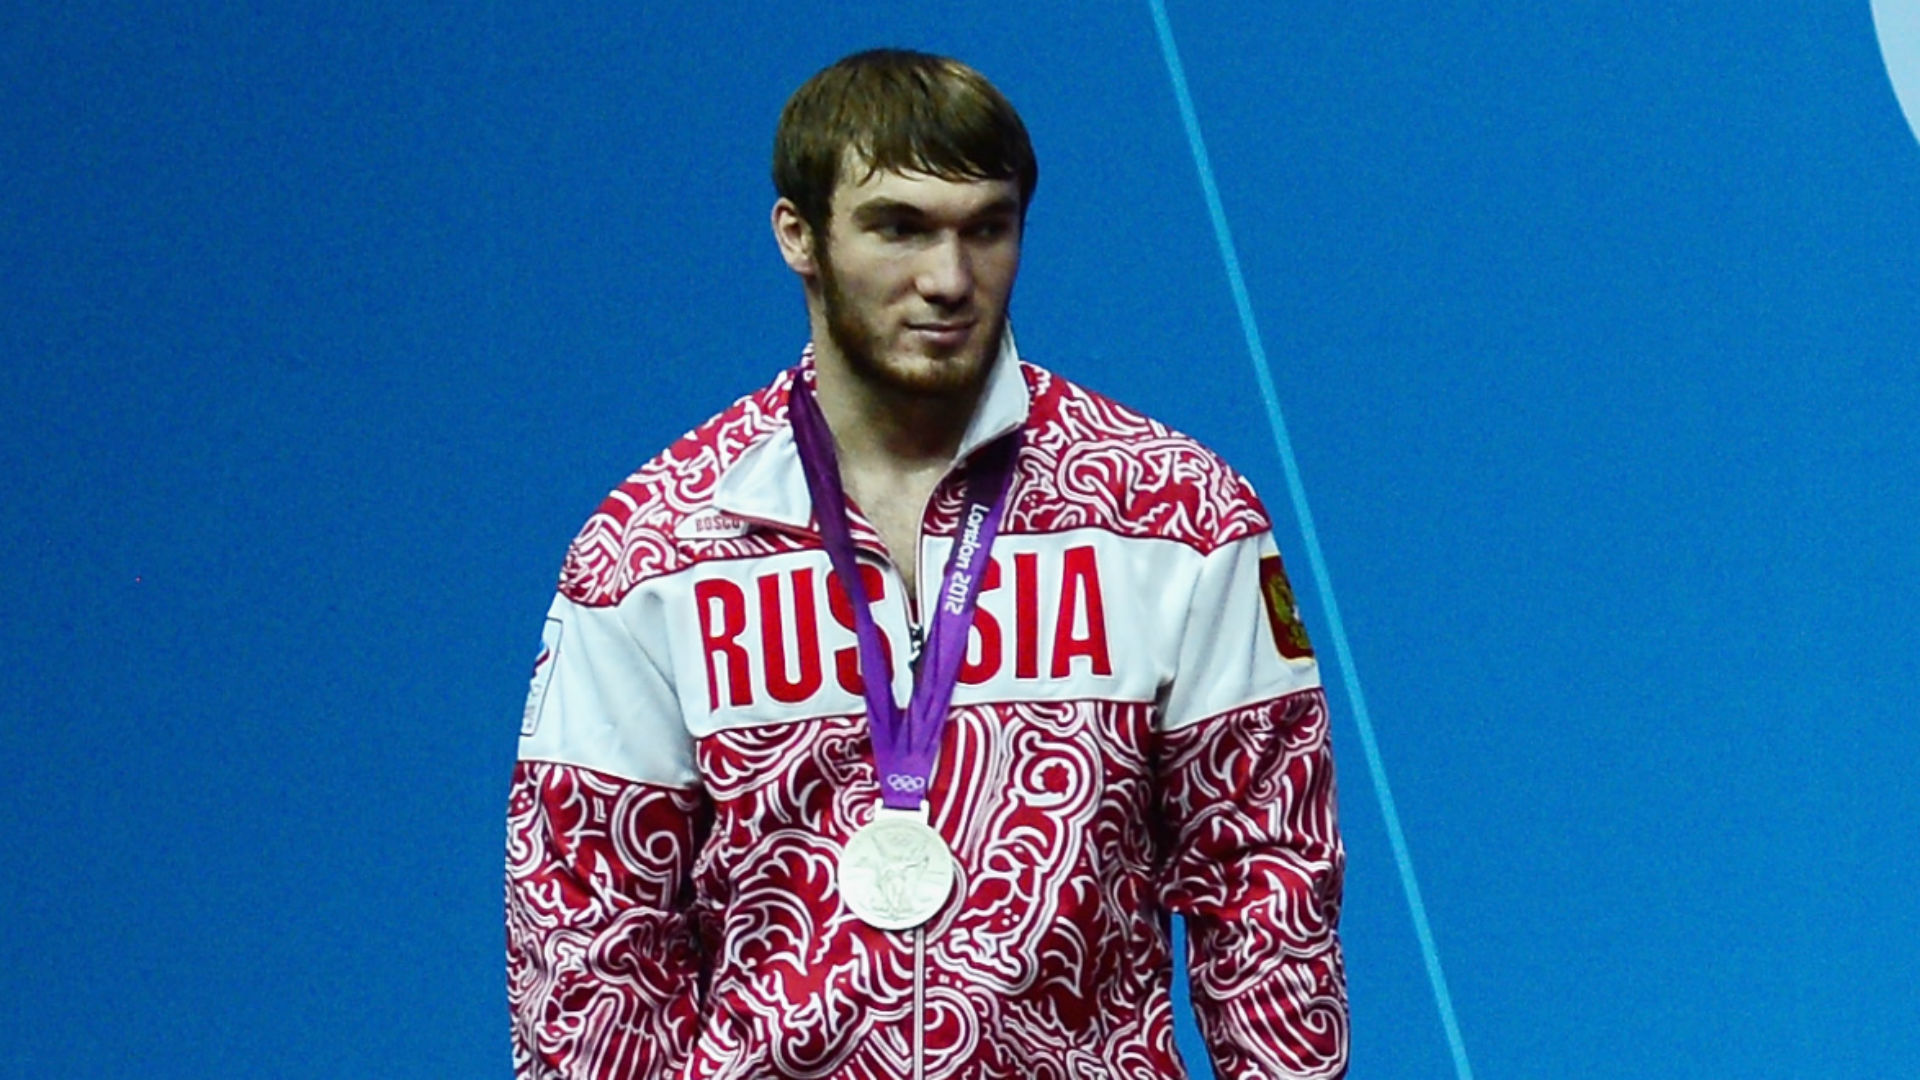 London 2012 weightlifting silver medallist Aukhadov disqualified - sportal.co.nz